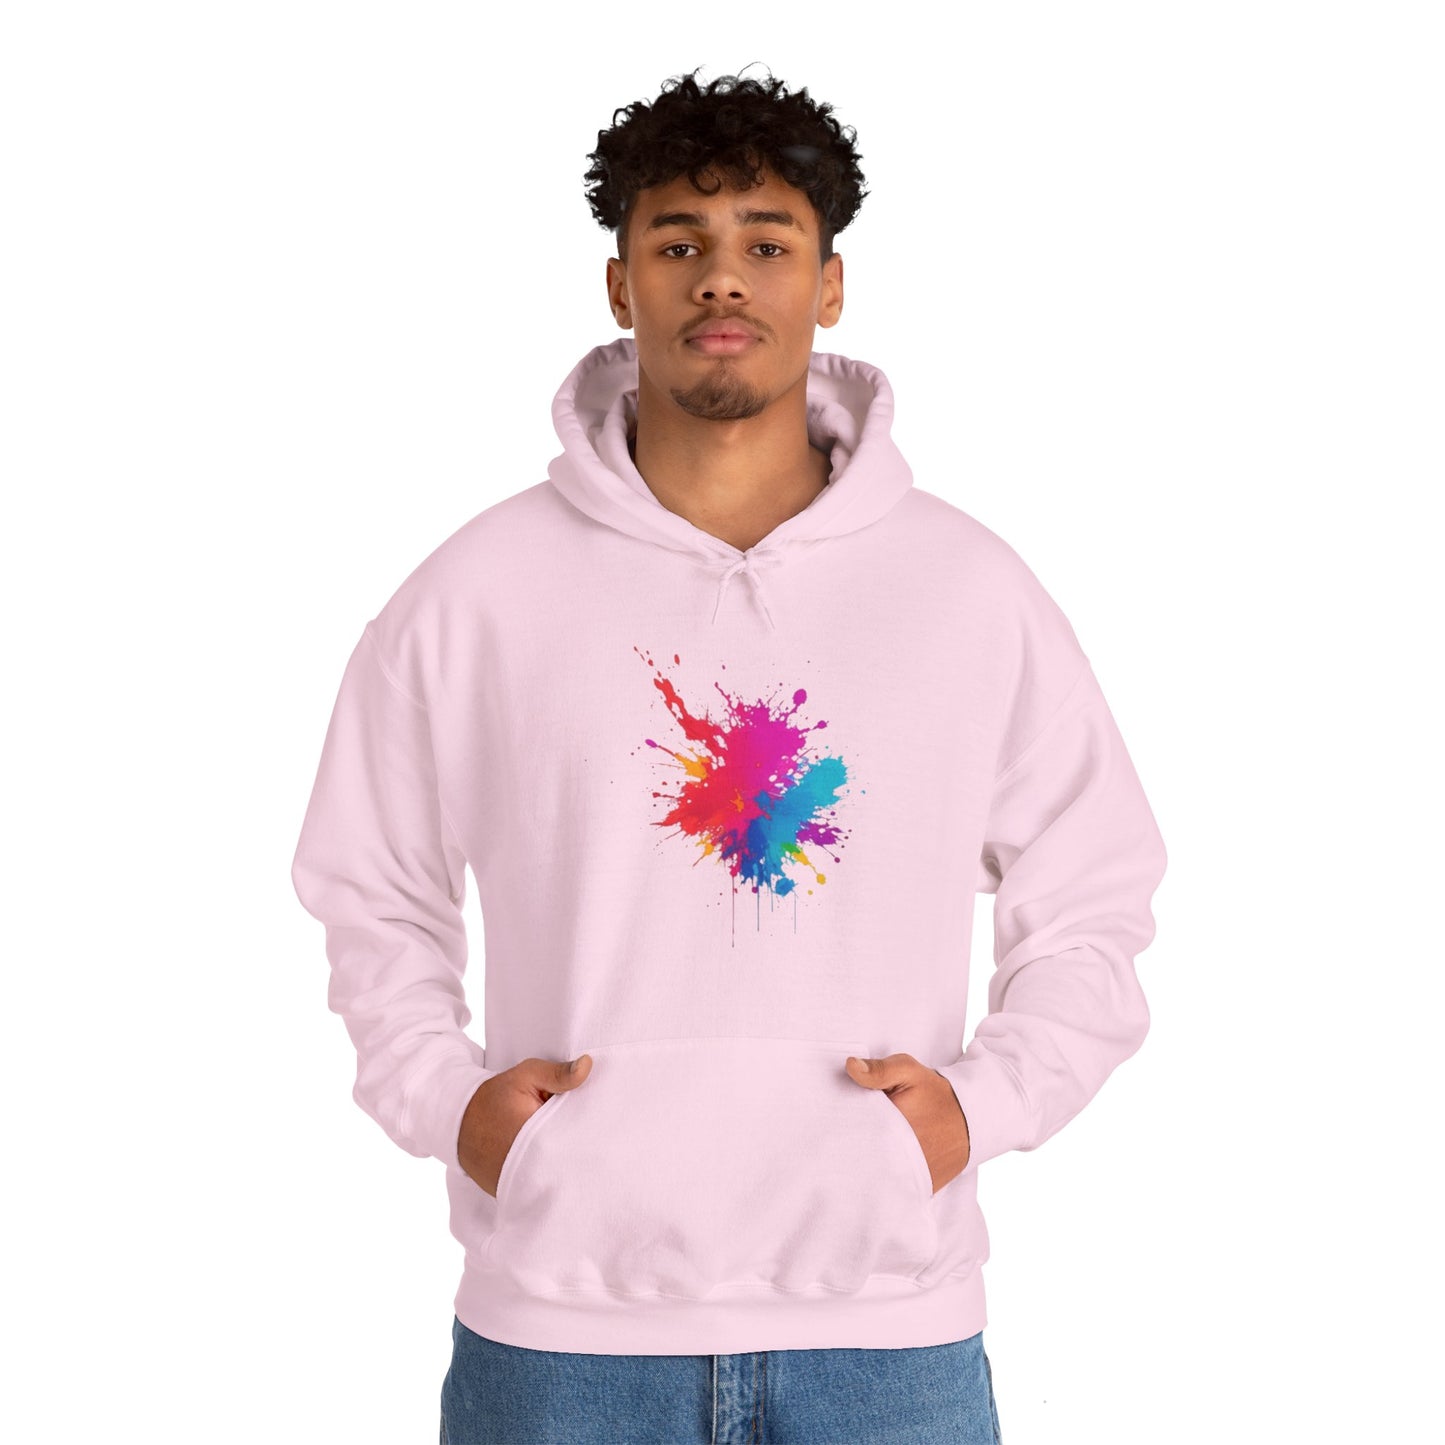 Colourful Paint Splatter - Unisex Hooded Sweatshirt